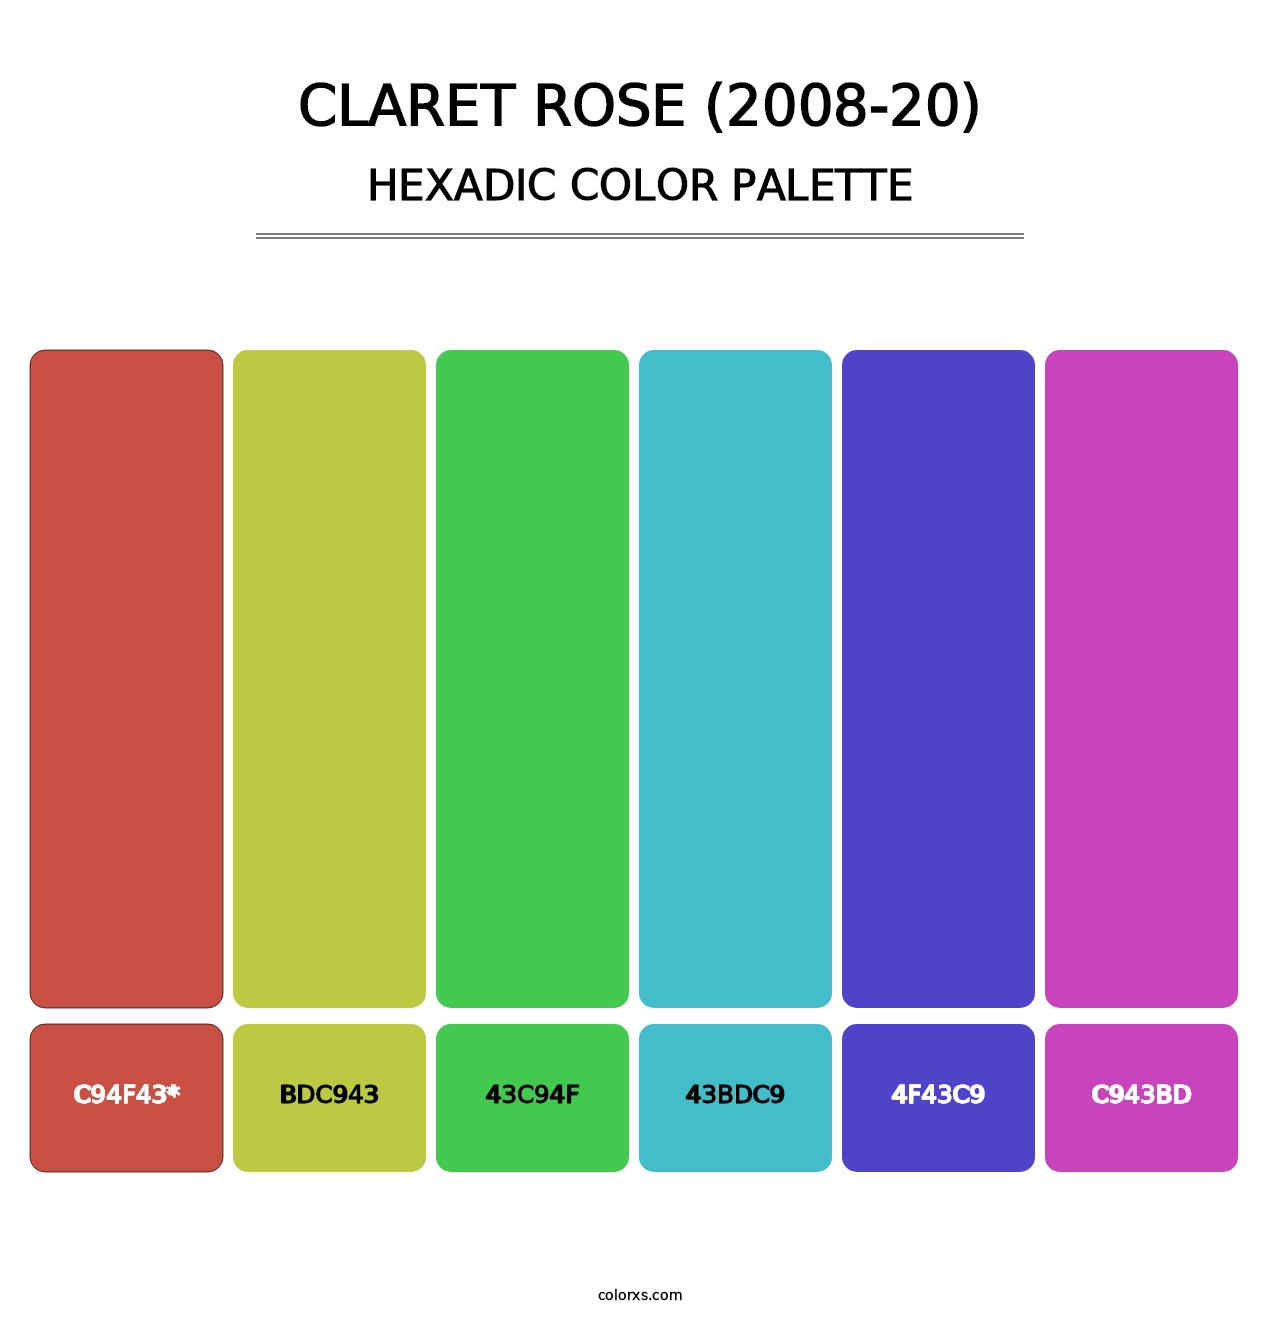 Claret Rose (2008-20) - Hexadic Color Palette